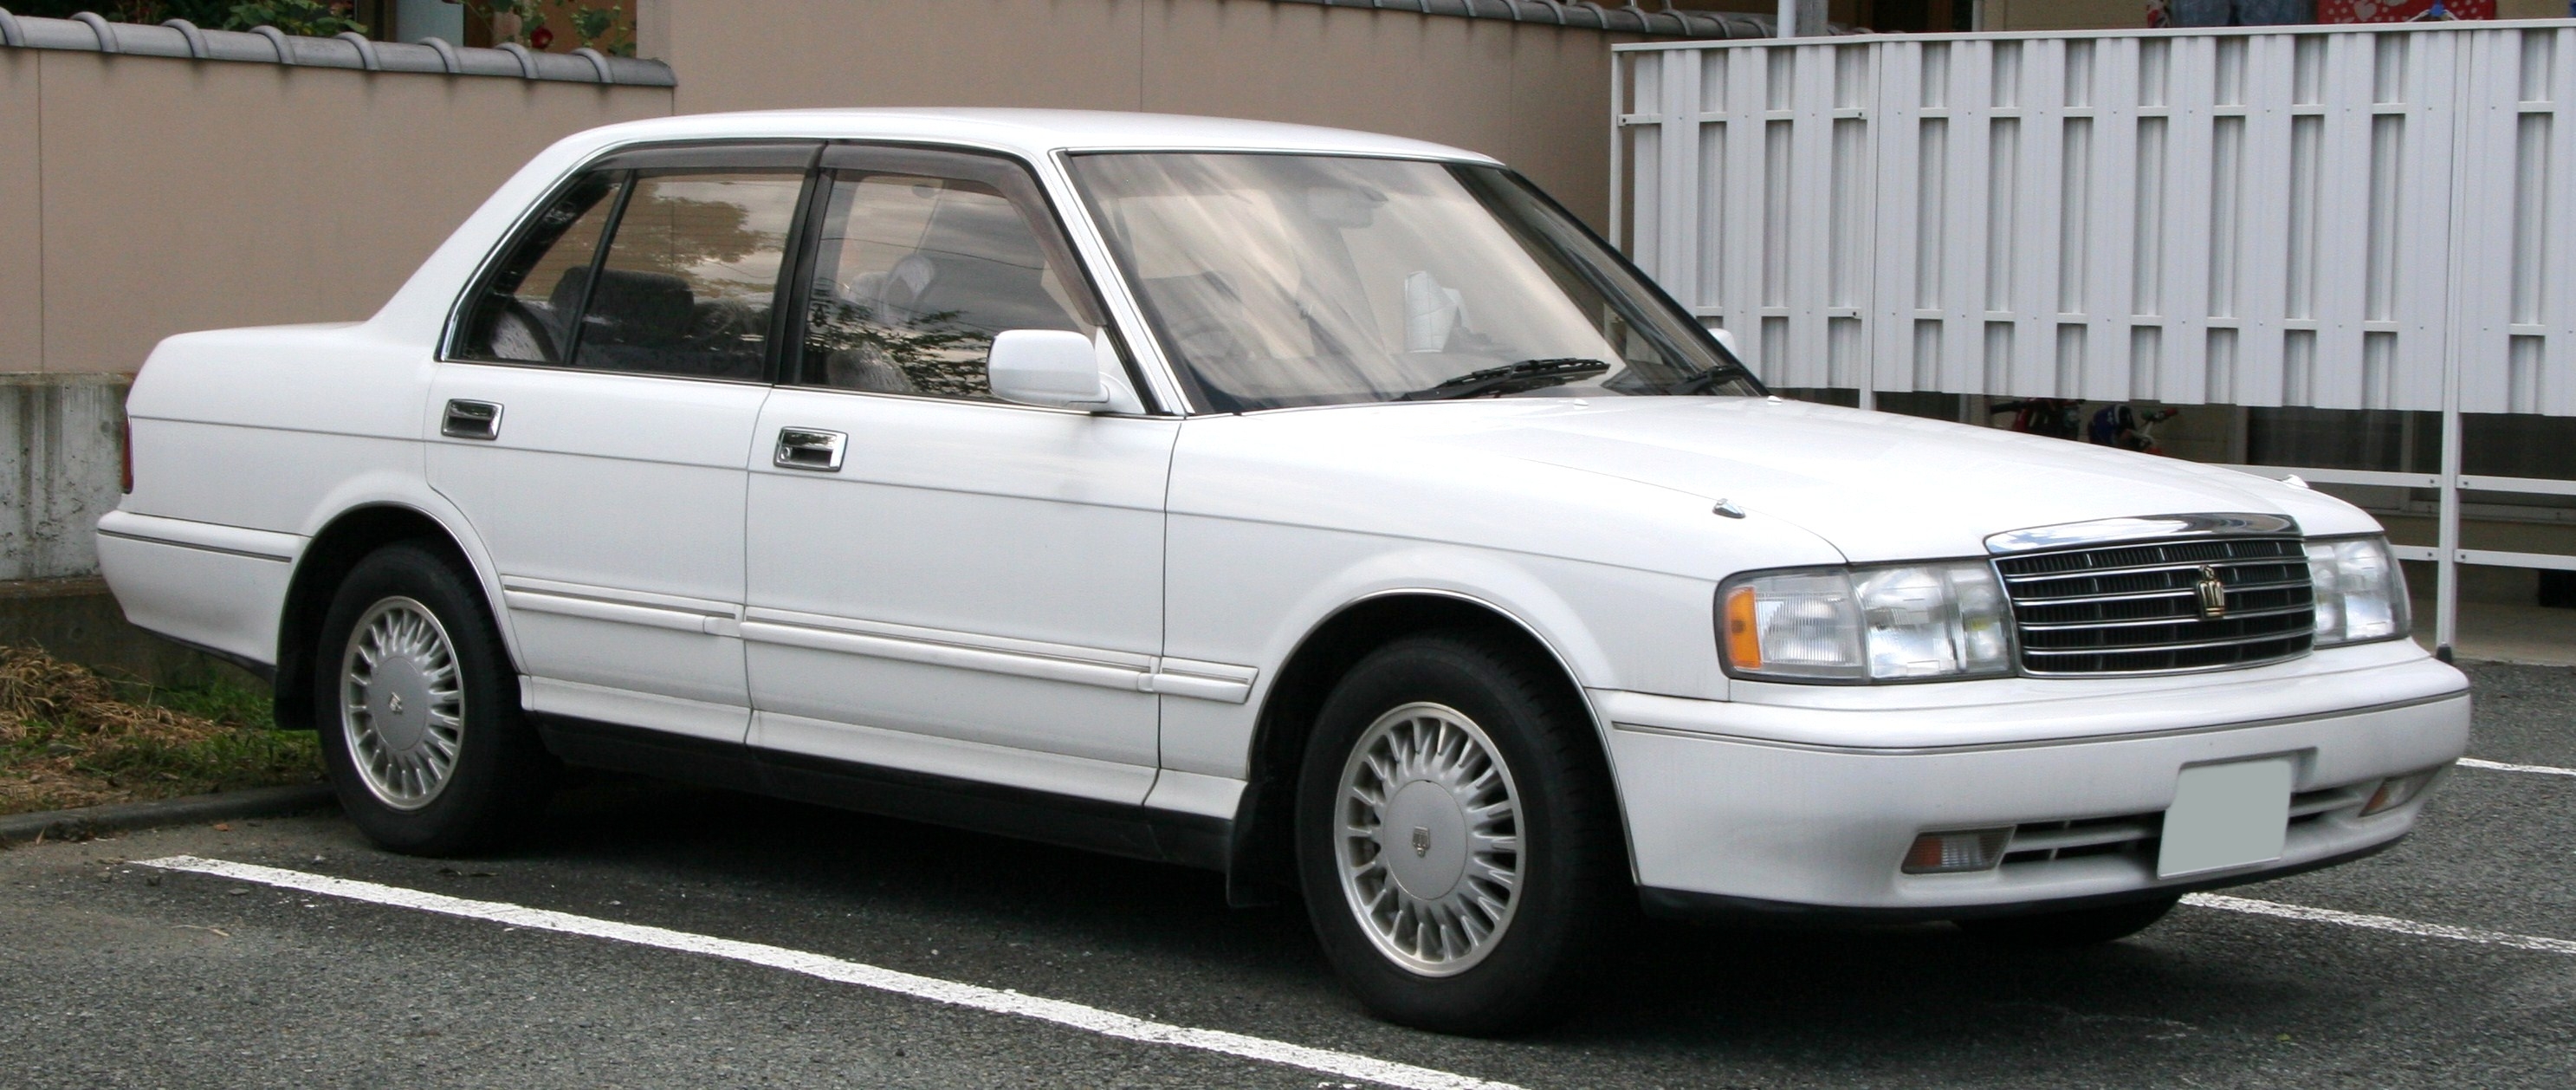 toyota crown sedan-pic. 1